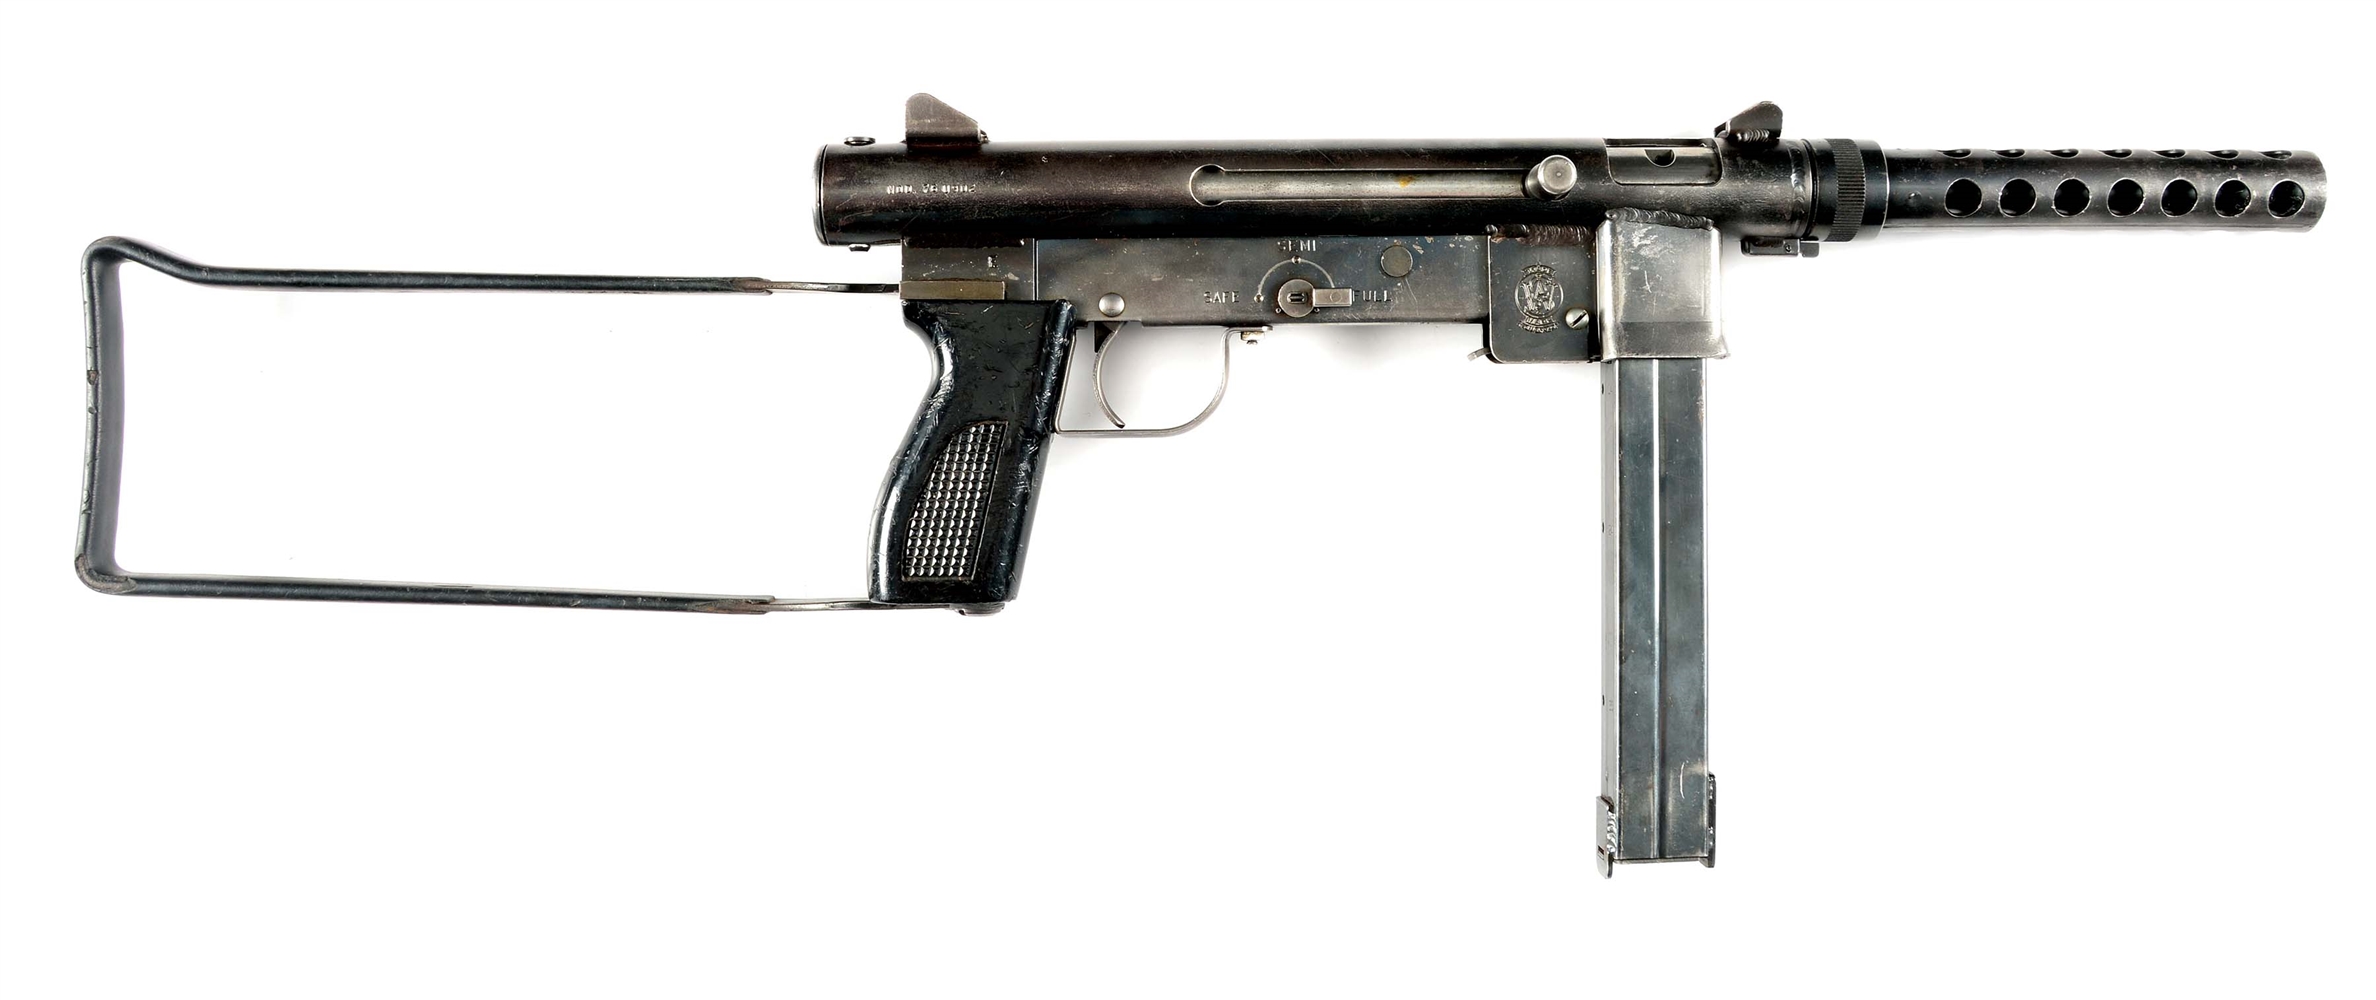 (N) VERY POPULAR SMITH & WESSON MODEL 76 MACHINE GUN (FULLY TRANSFERABLE).